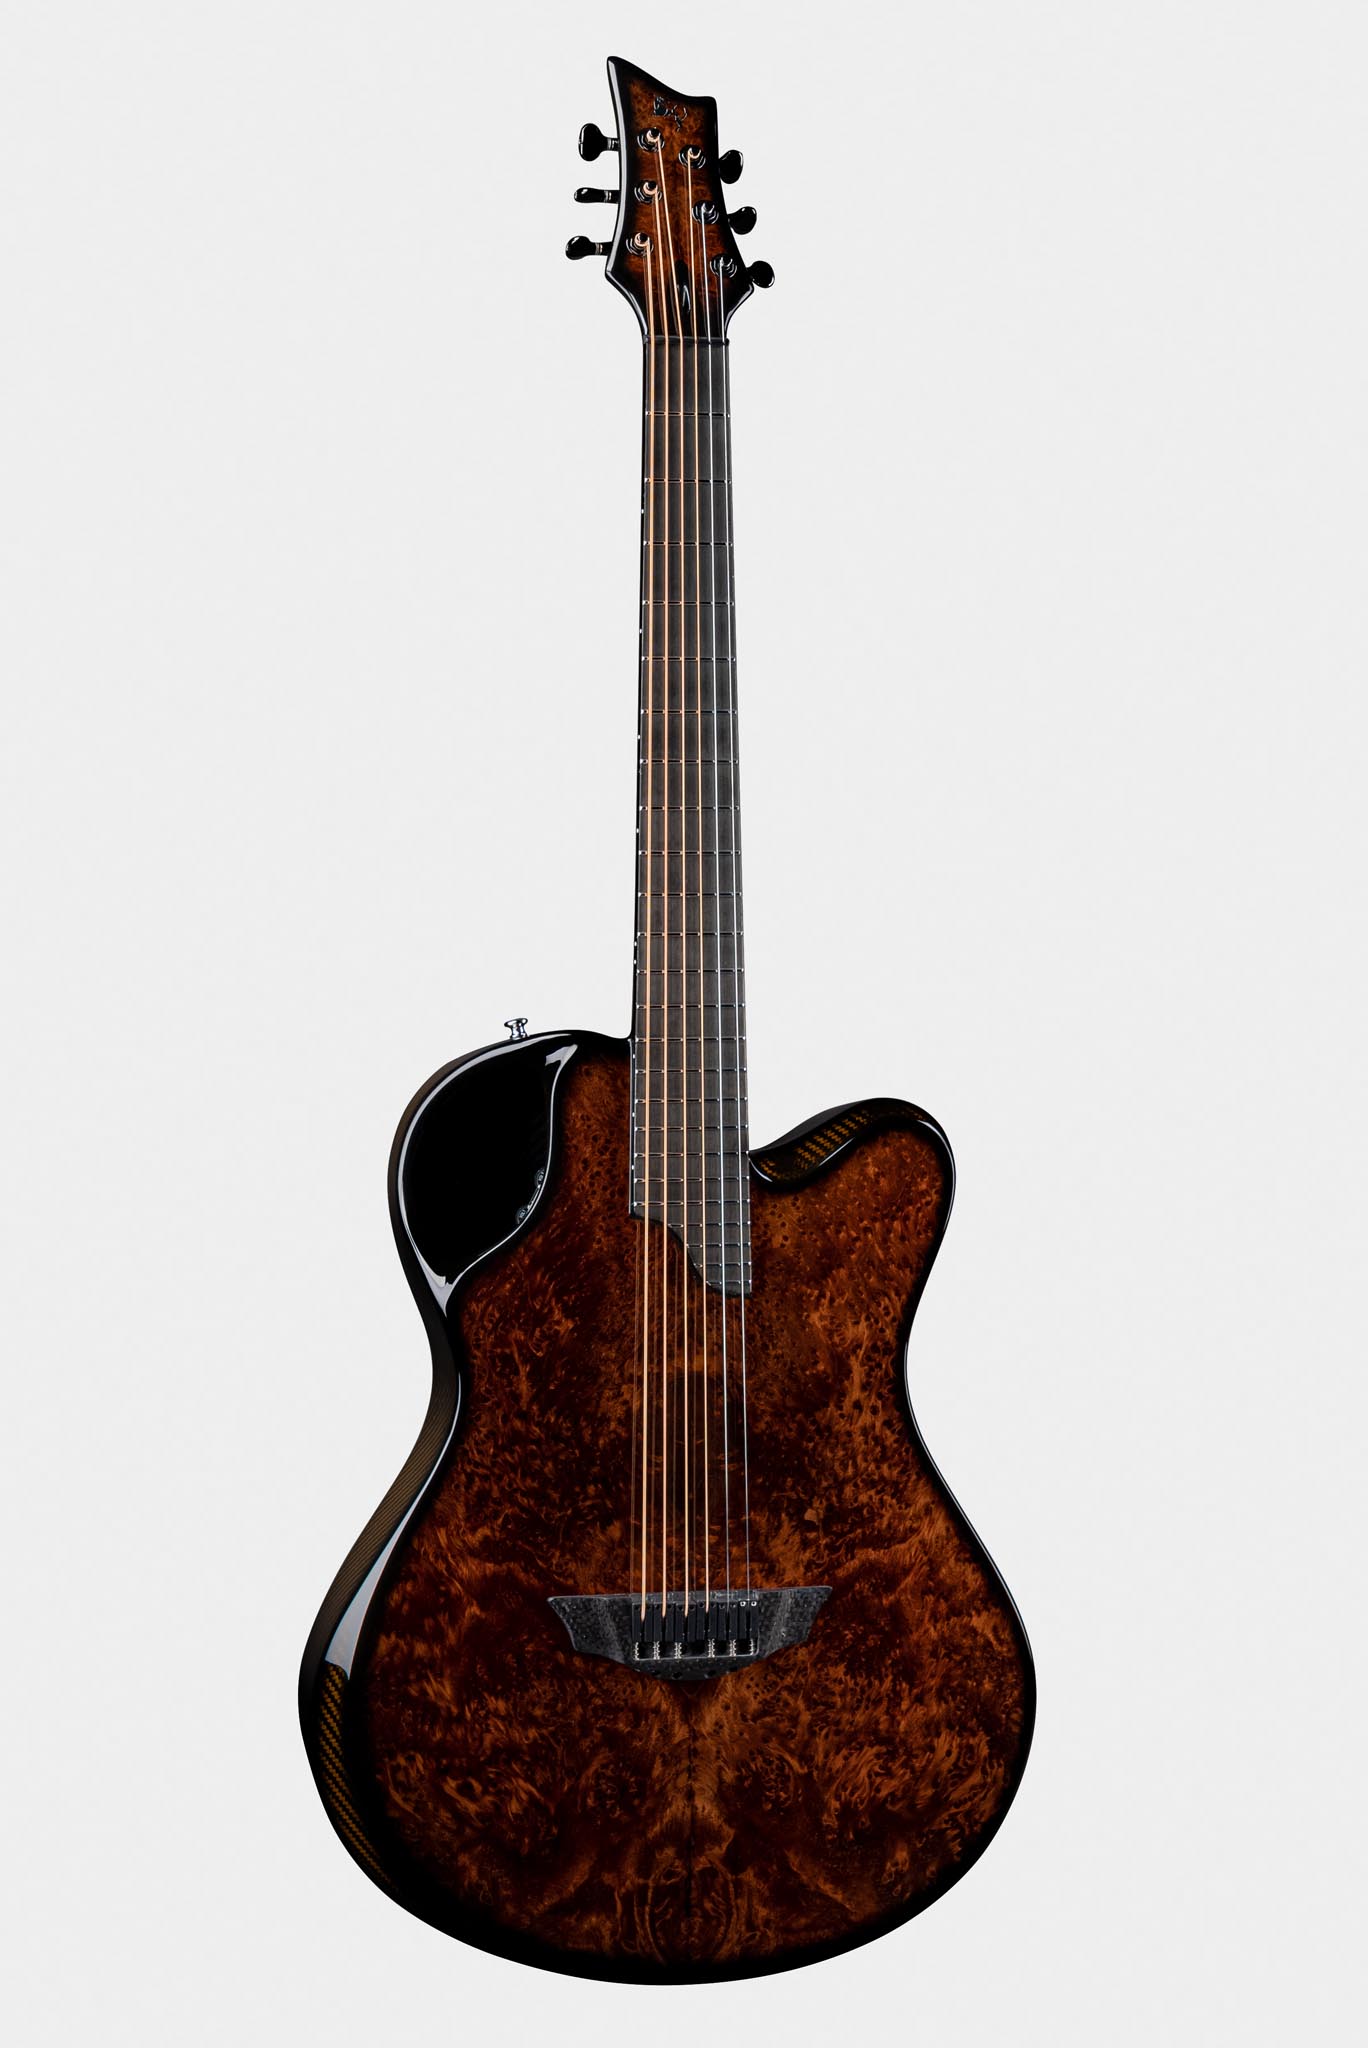 Emerald X20 Carbon Fiber Guitar in Redwood Burl